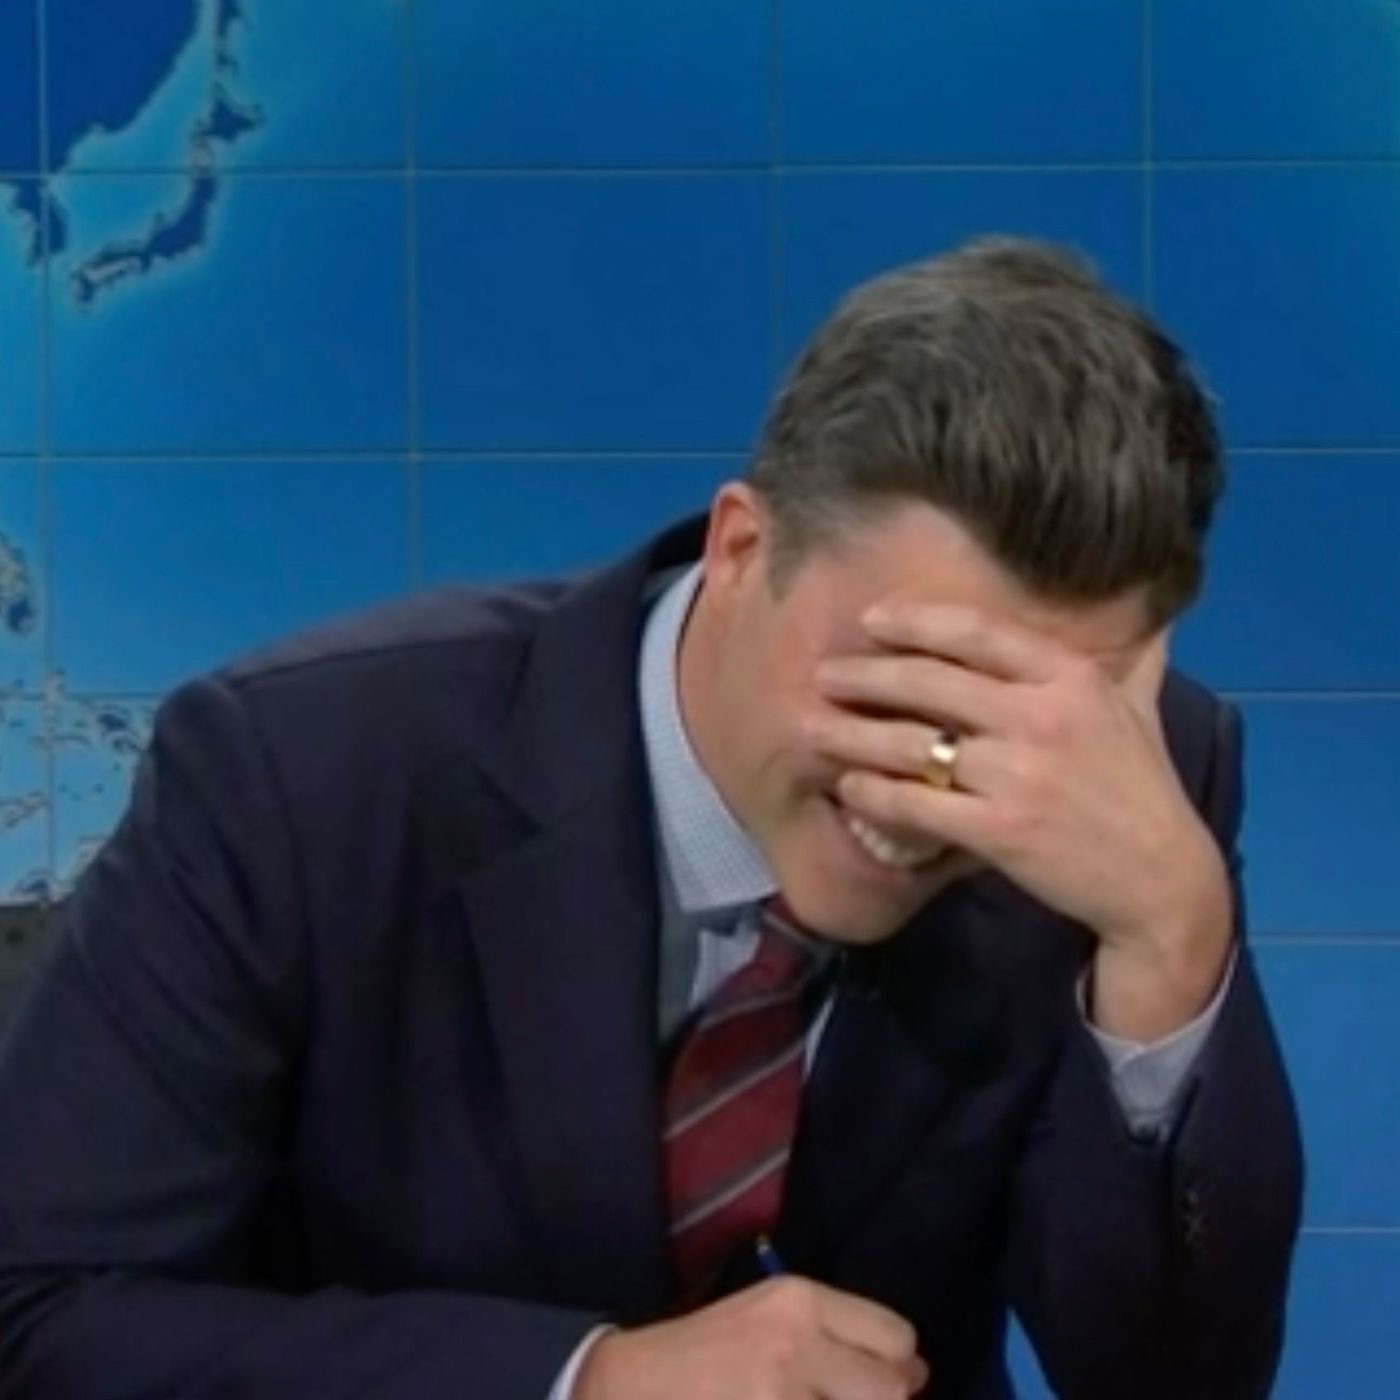 Michael B. Jordan Scores an Abs-olute Win as 'Saturday Night Live' Host